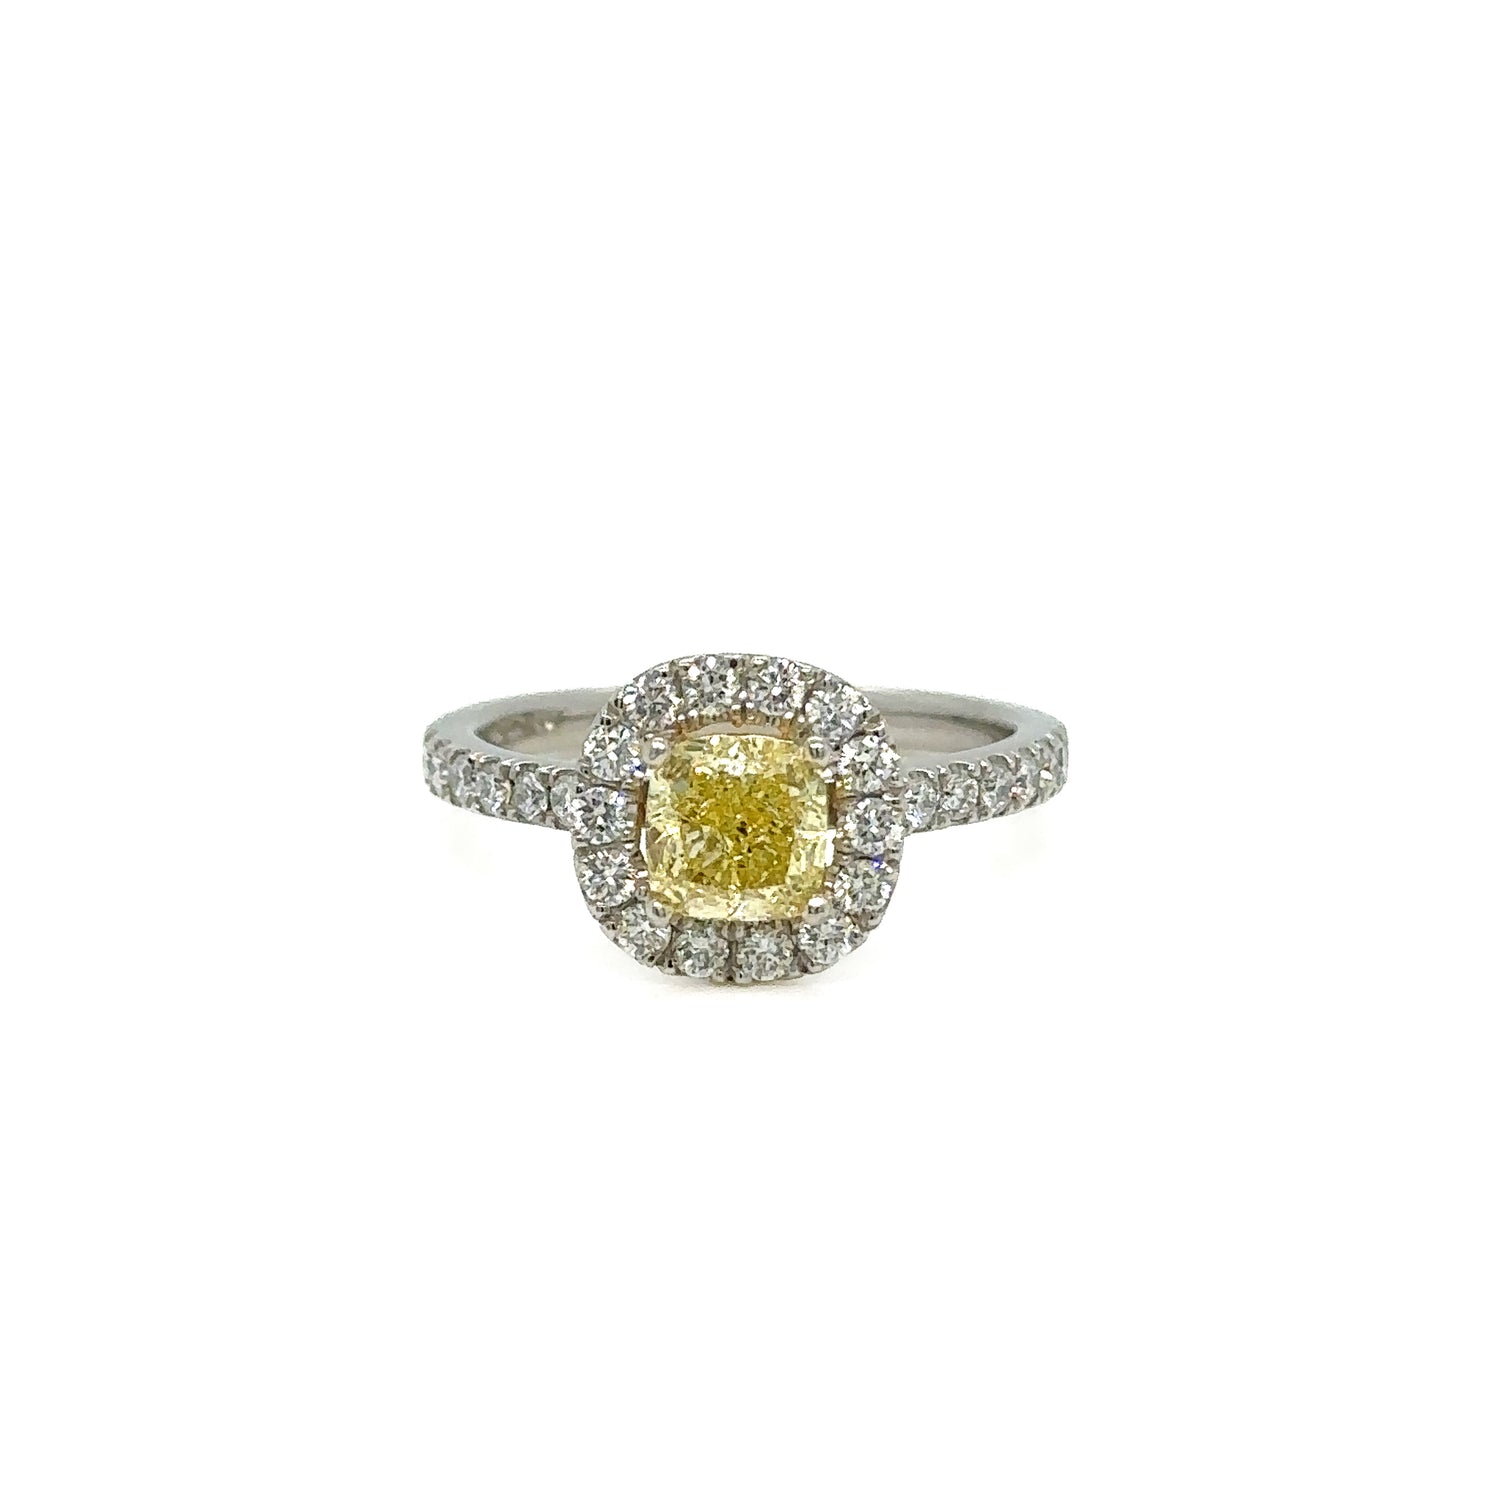 1.04ct Yellow Cushion Cut Diamond Ring with Diamond Halo